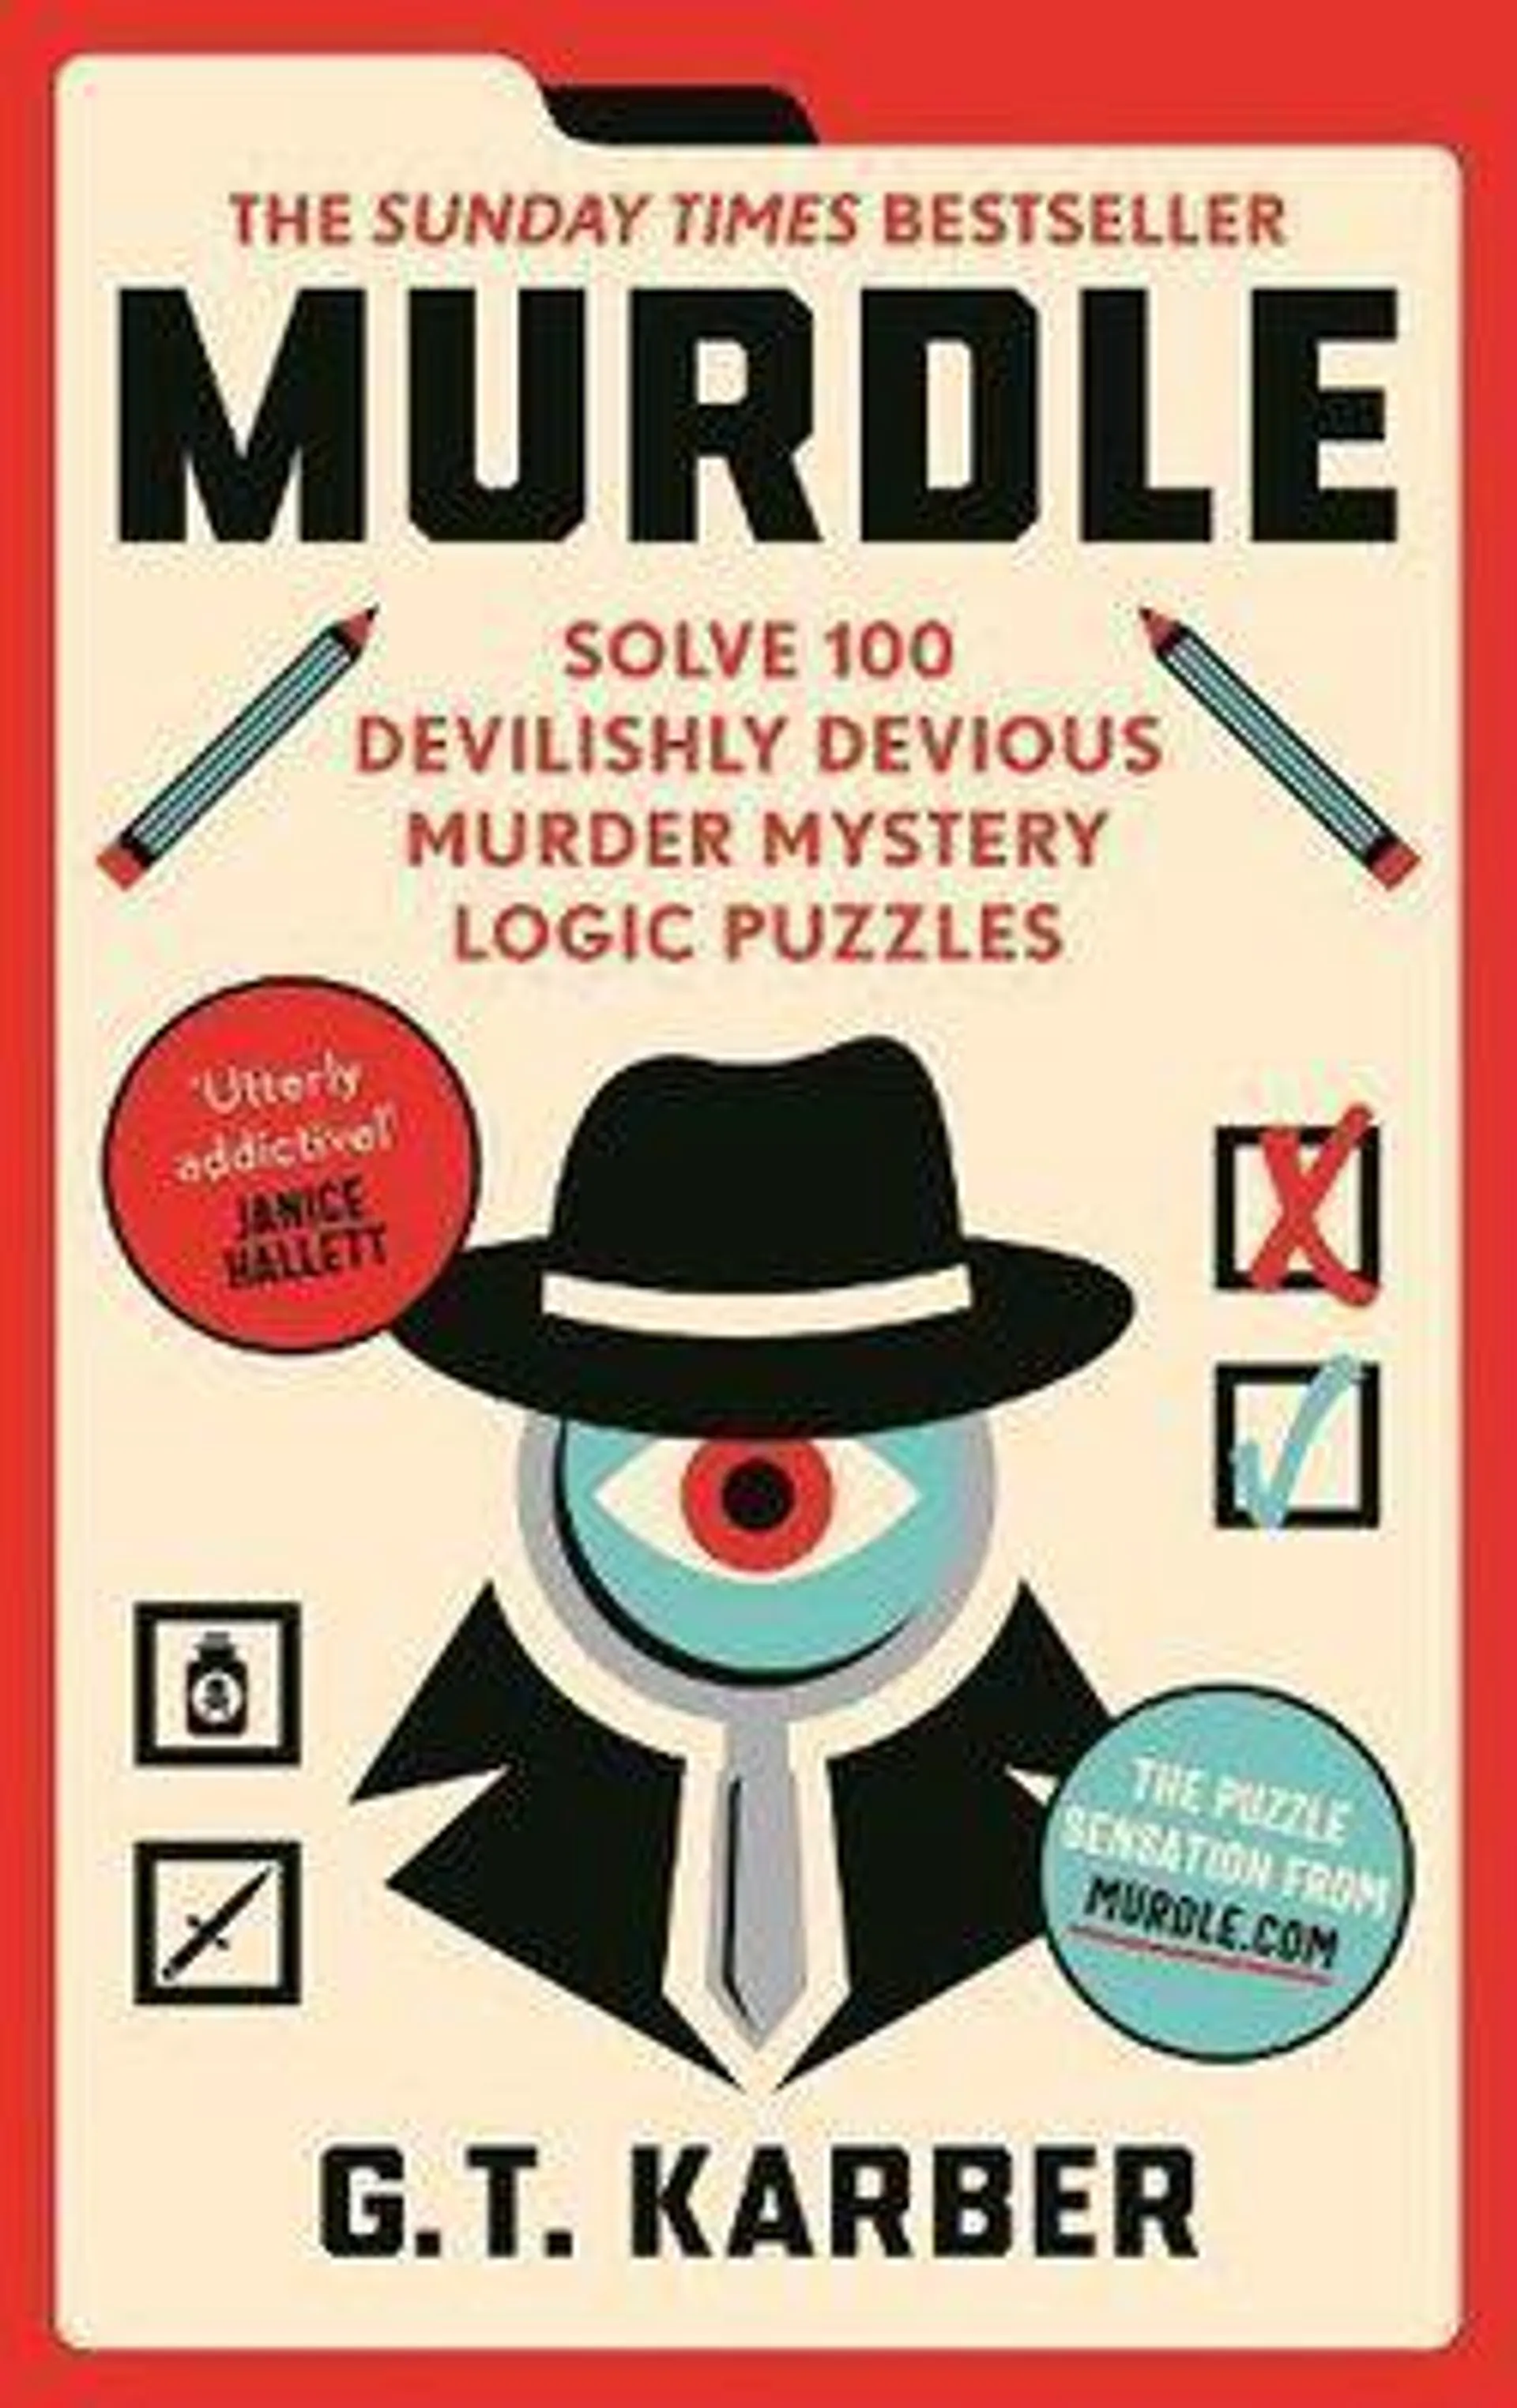 : #1 SUNDAY TIMES BESTSELLER: Solve 100 Devilishly Devious Murder Mystery Logic Puzzles